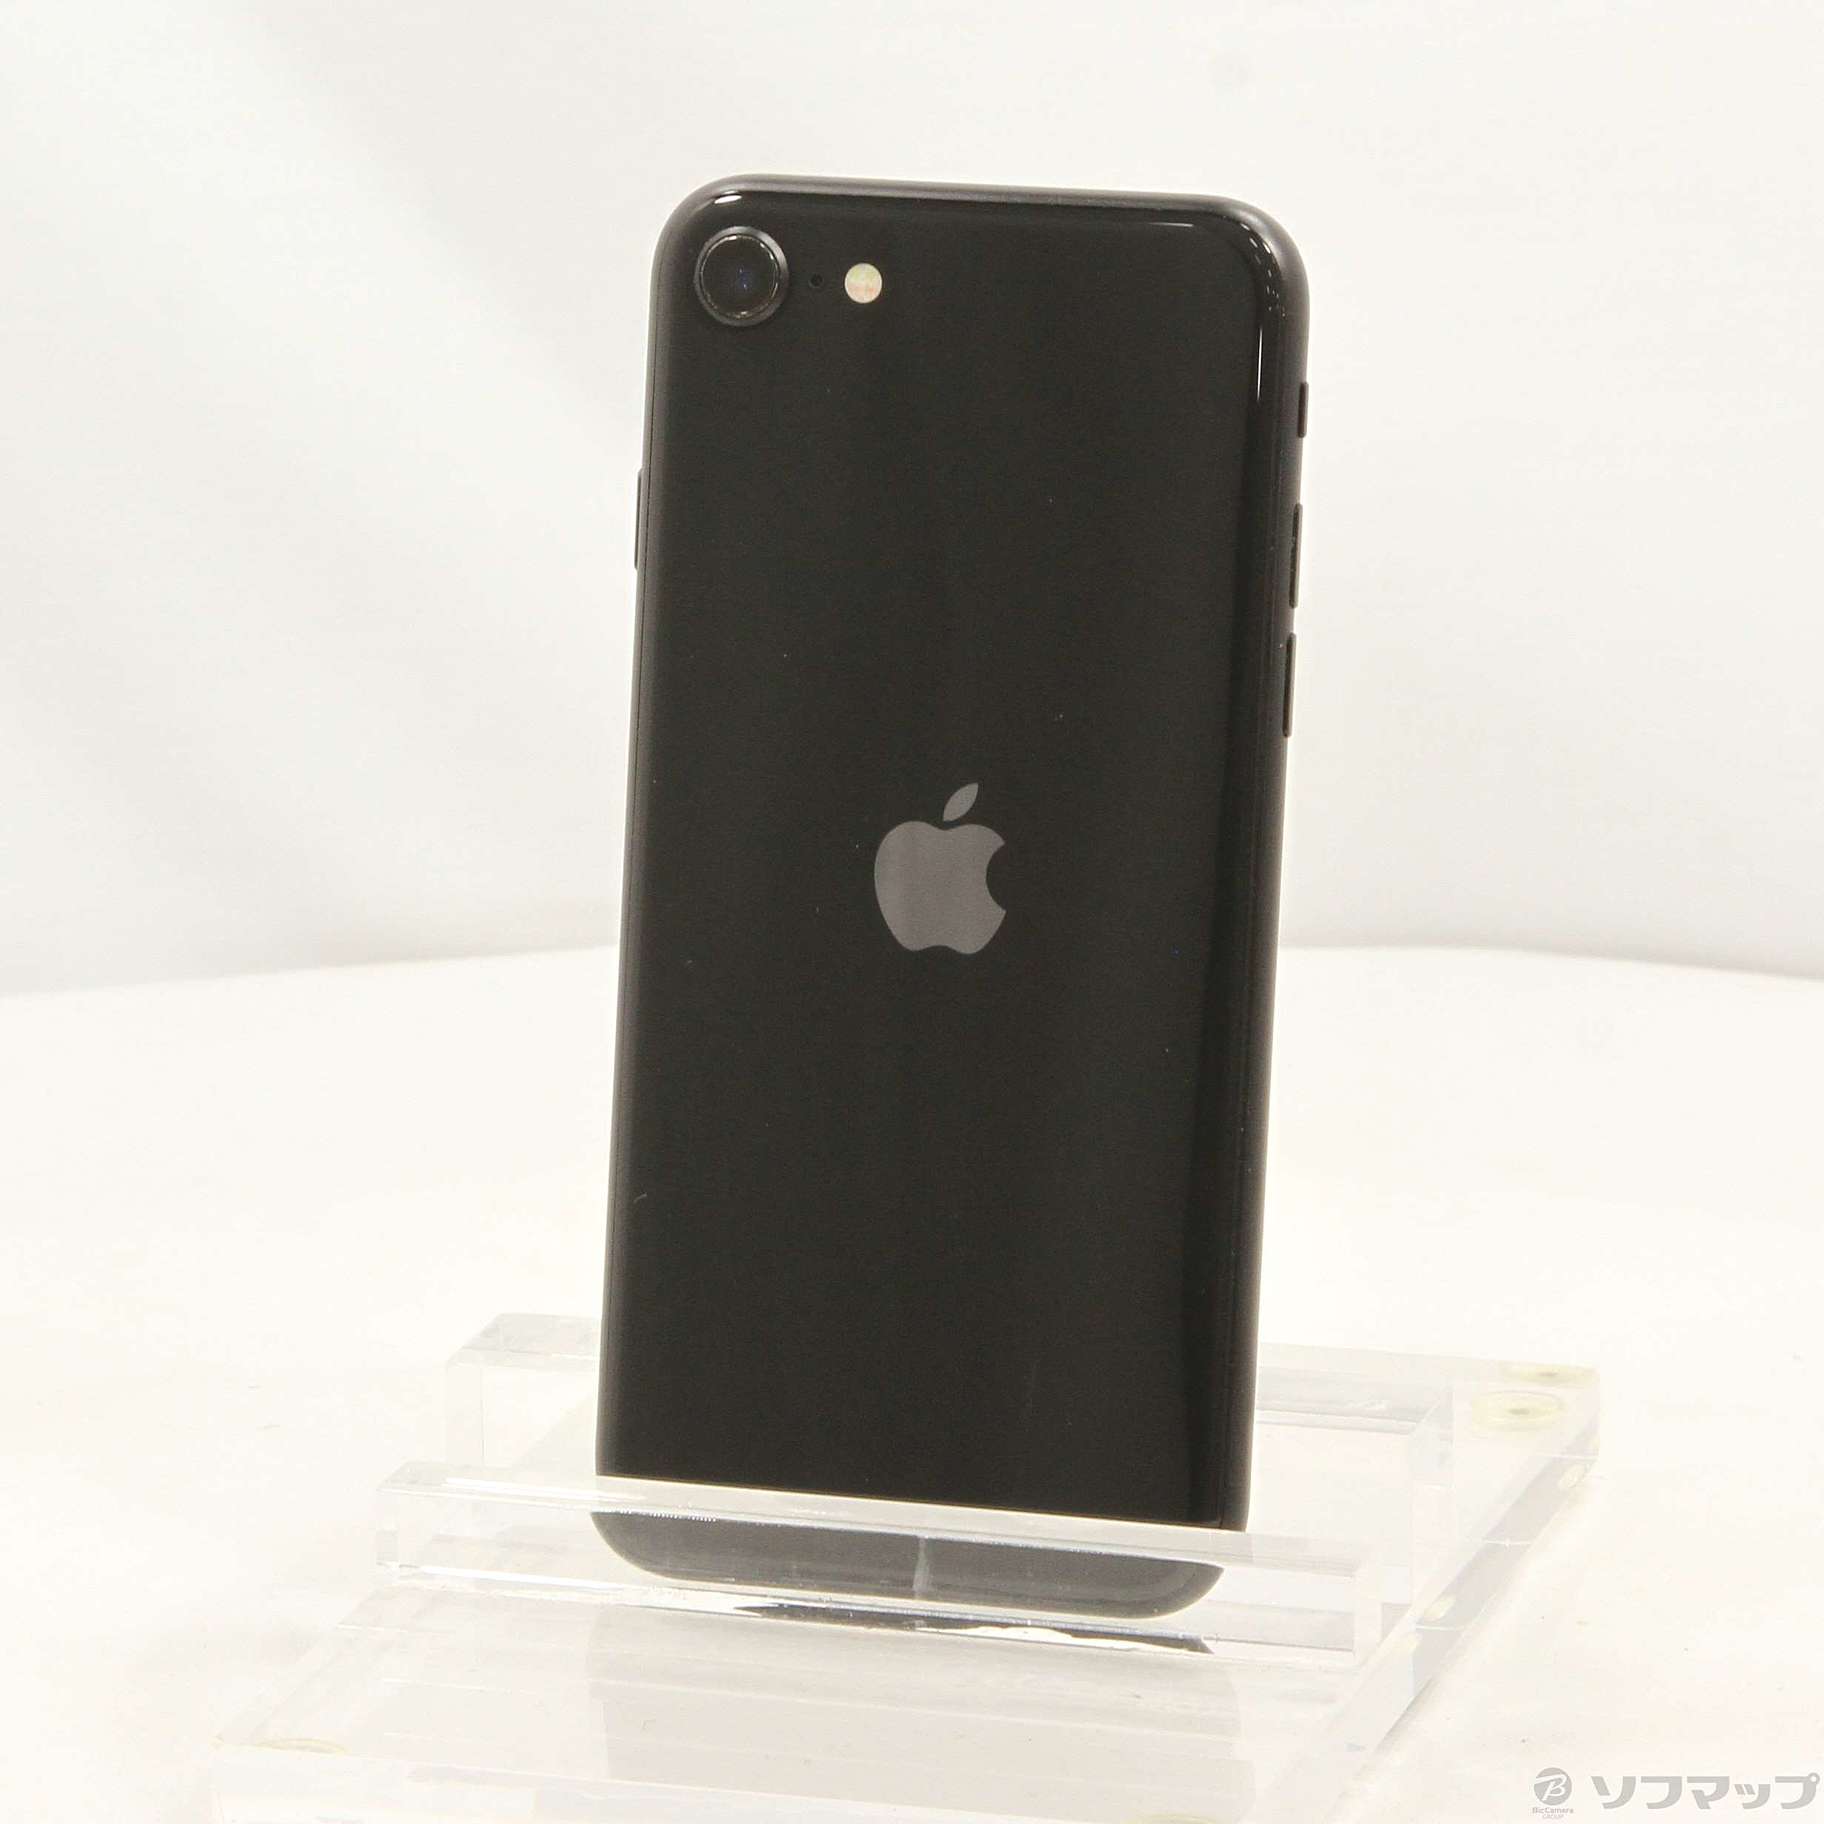 Apple iPhone SE 第二世代 128g SIMフリーSIMフリー - www